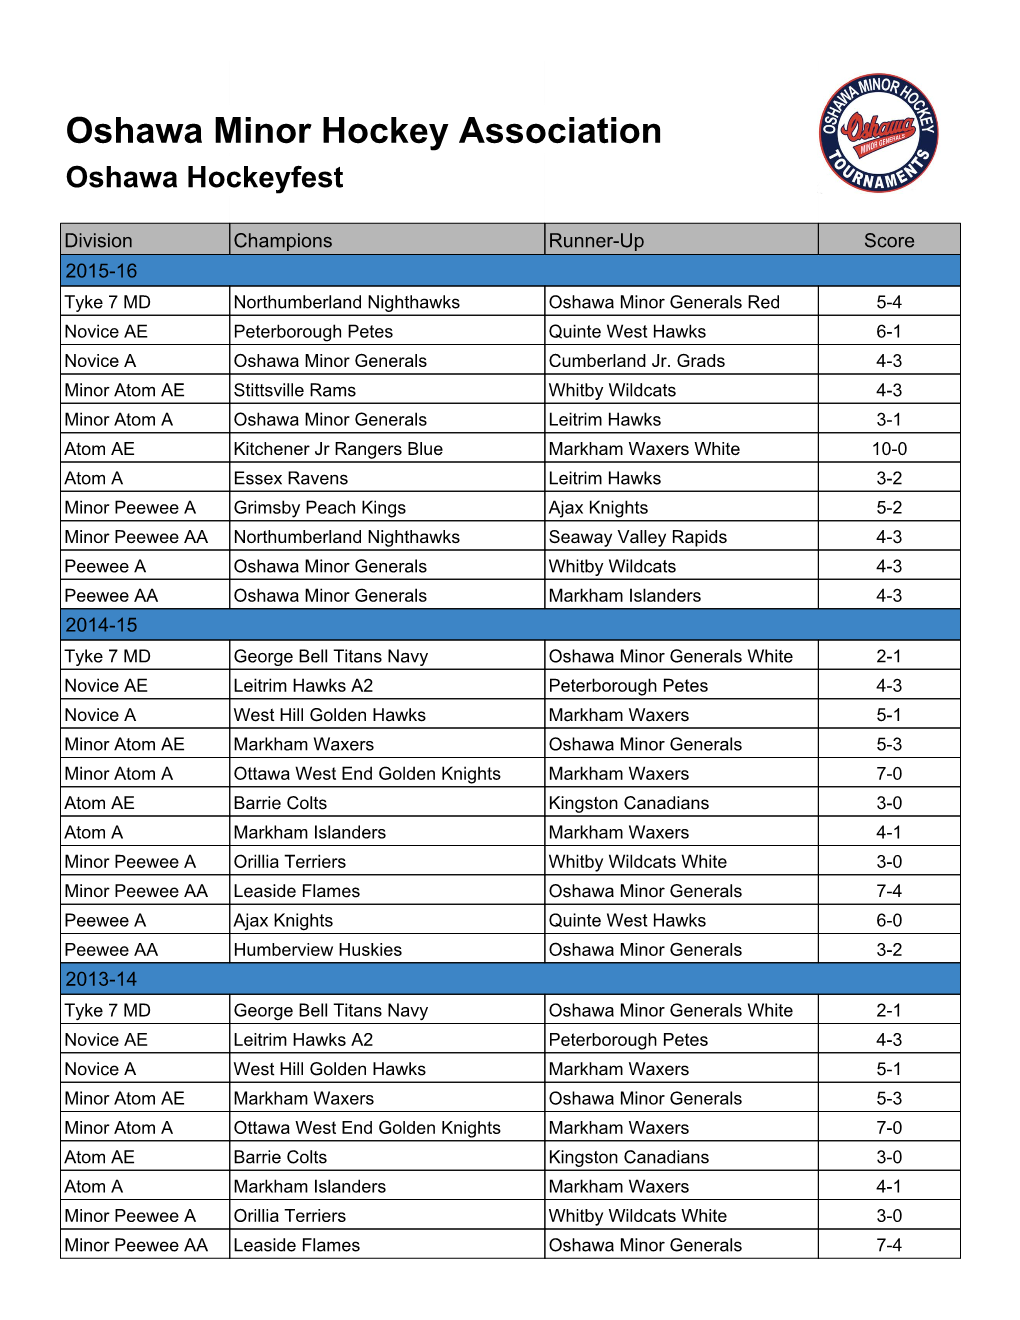 Oshawa Minor Hockey Association Oshawa Hockeyfest